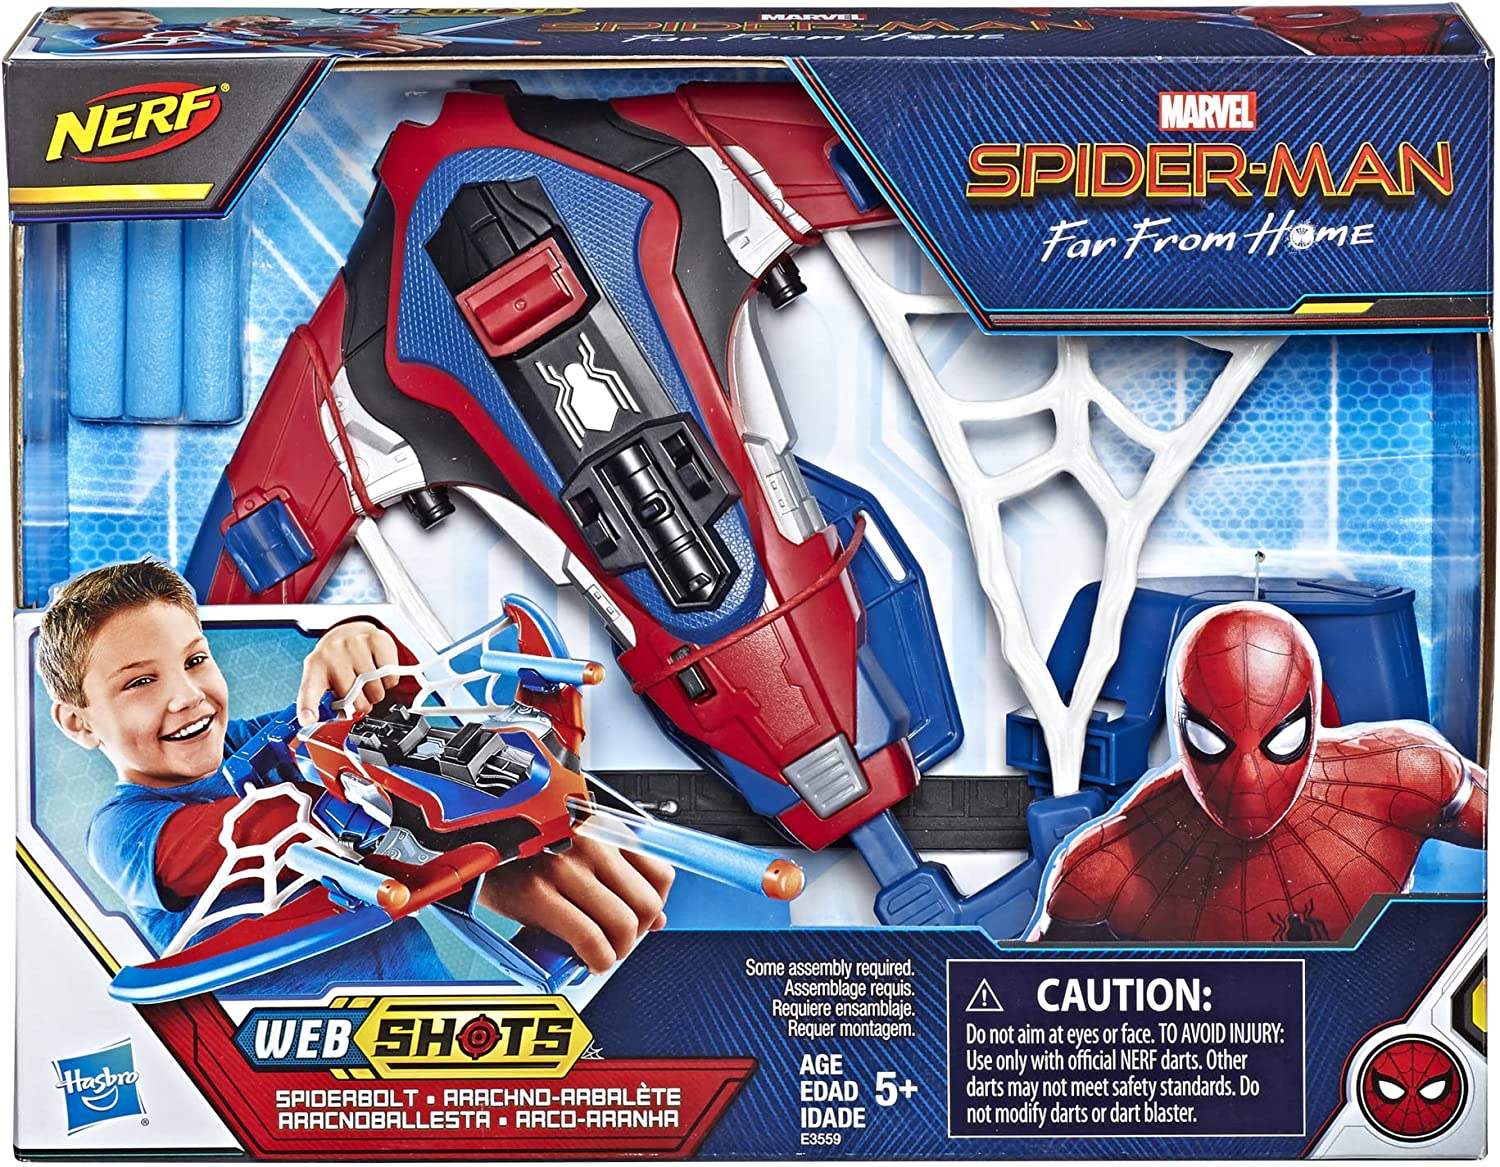 Spider-Man Web Shots Spiderbolt NERF Powered Blaster Toy - image 2 of 14